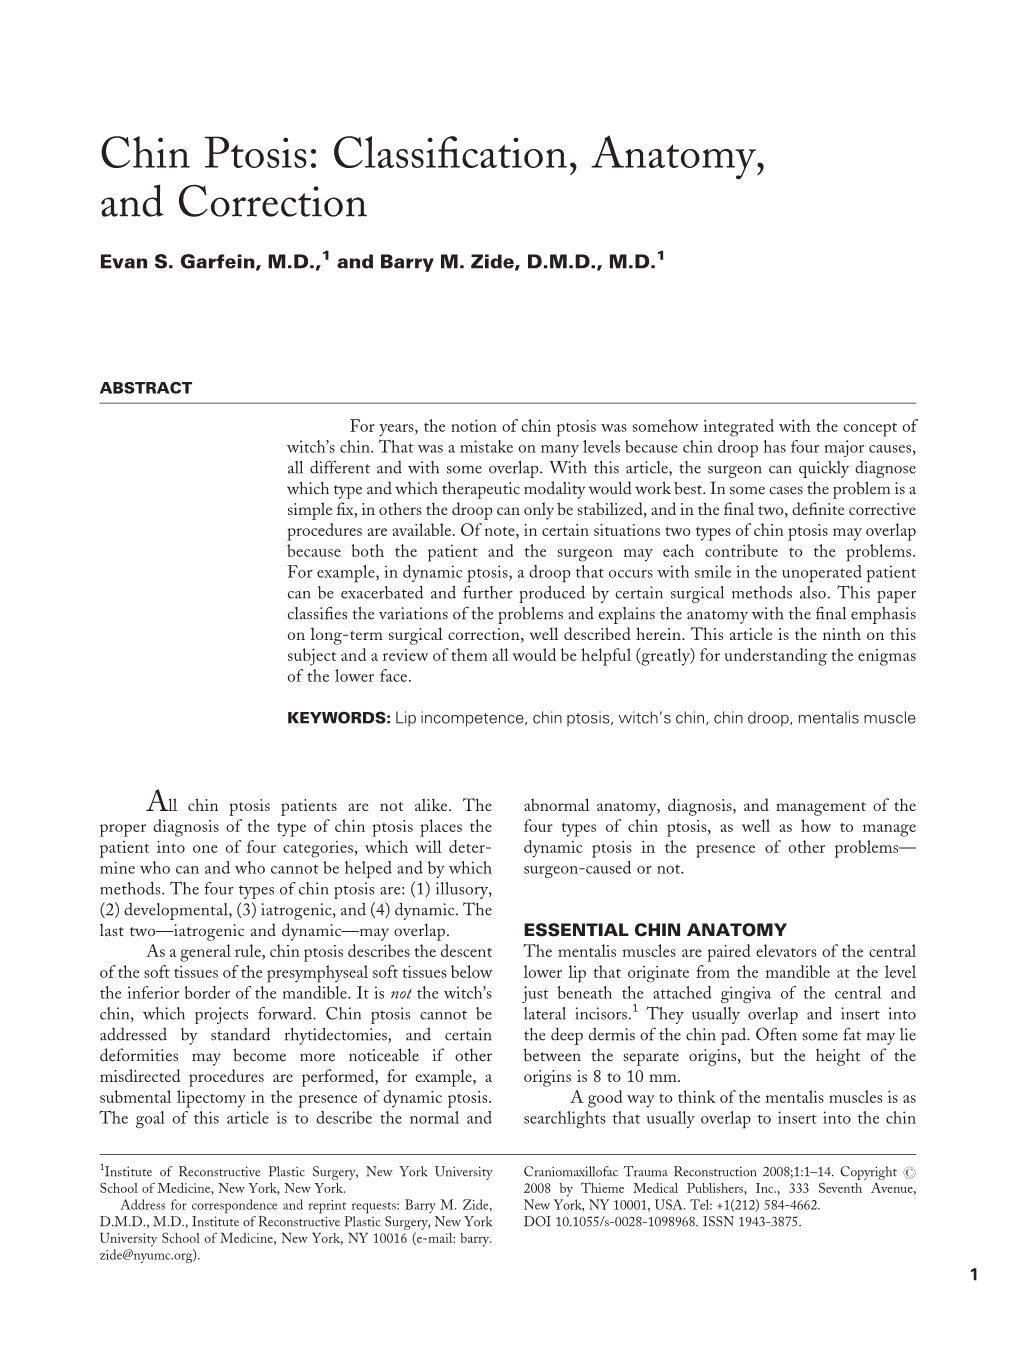 Chin Ptosis: Classification, Anatomy, and Correction/Garfein, Zide 3